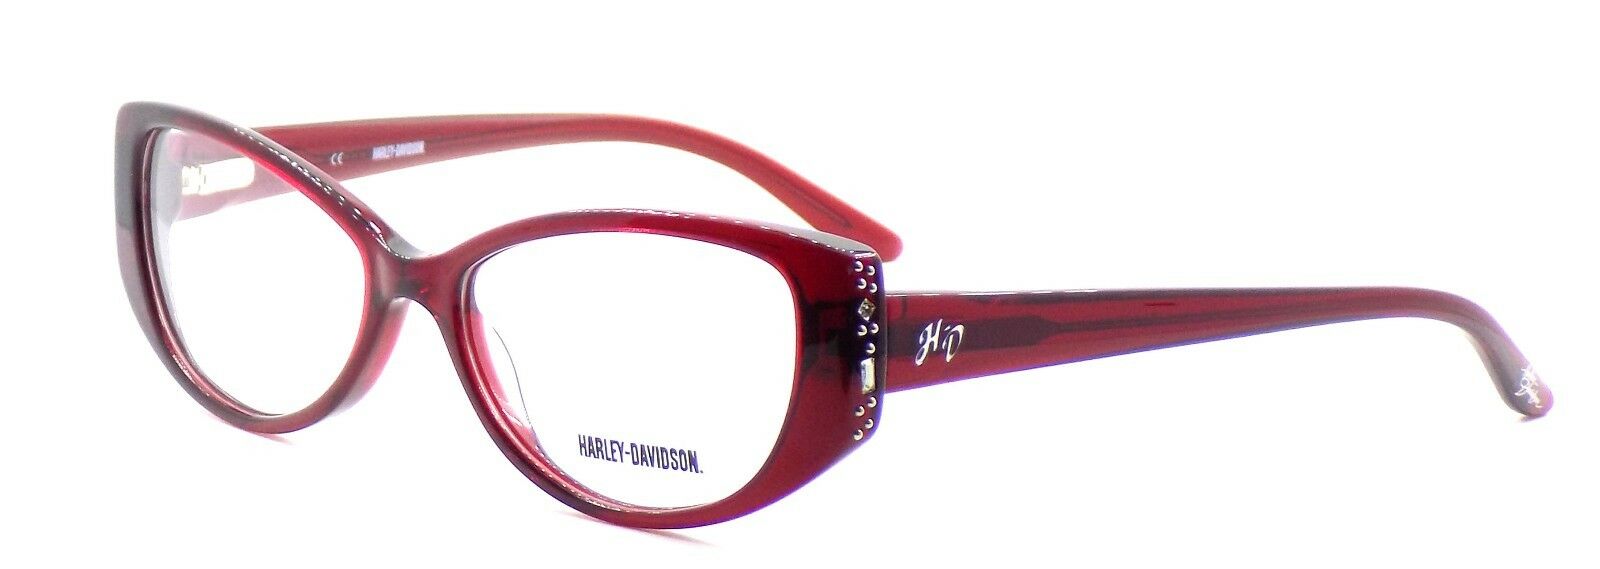 1-Harley Davidson HD514 RD Women's Eyeglasses Frames 51-15-135 Red + CASE-715583766563-IKSpecs